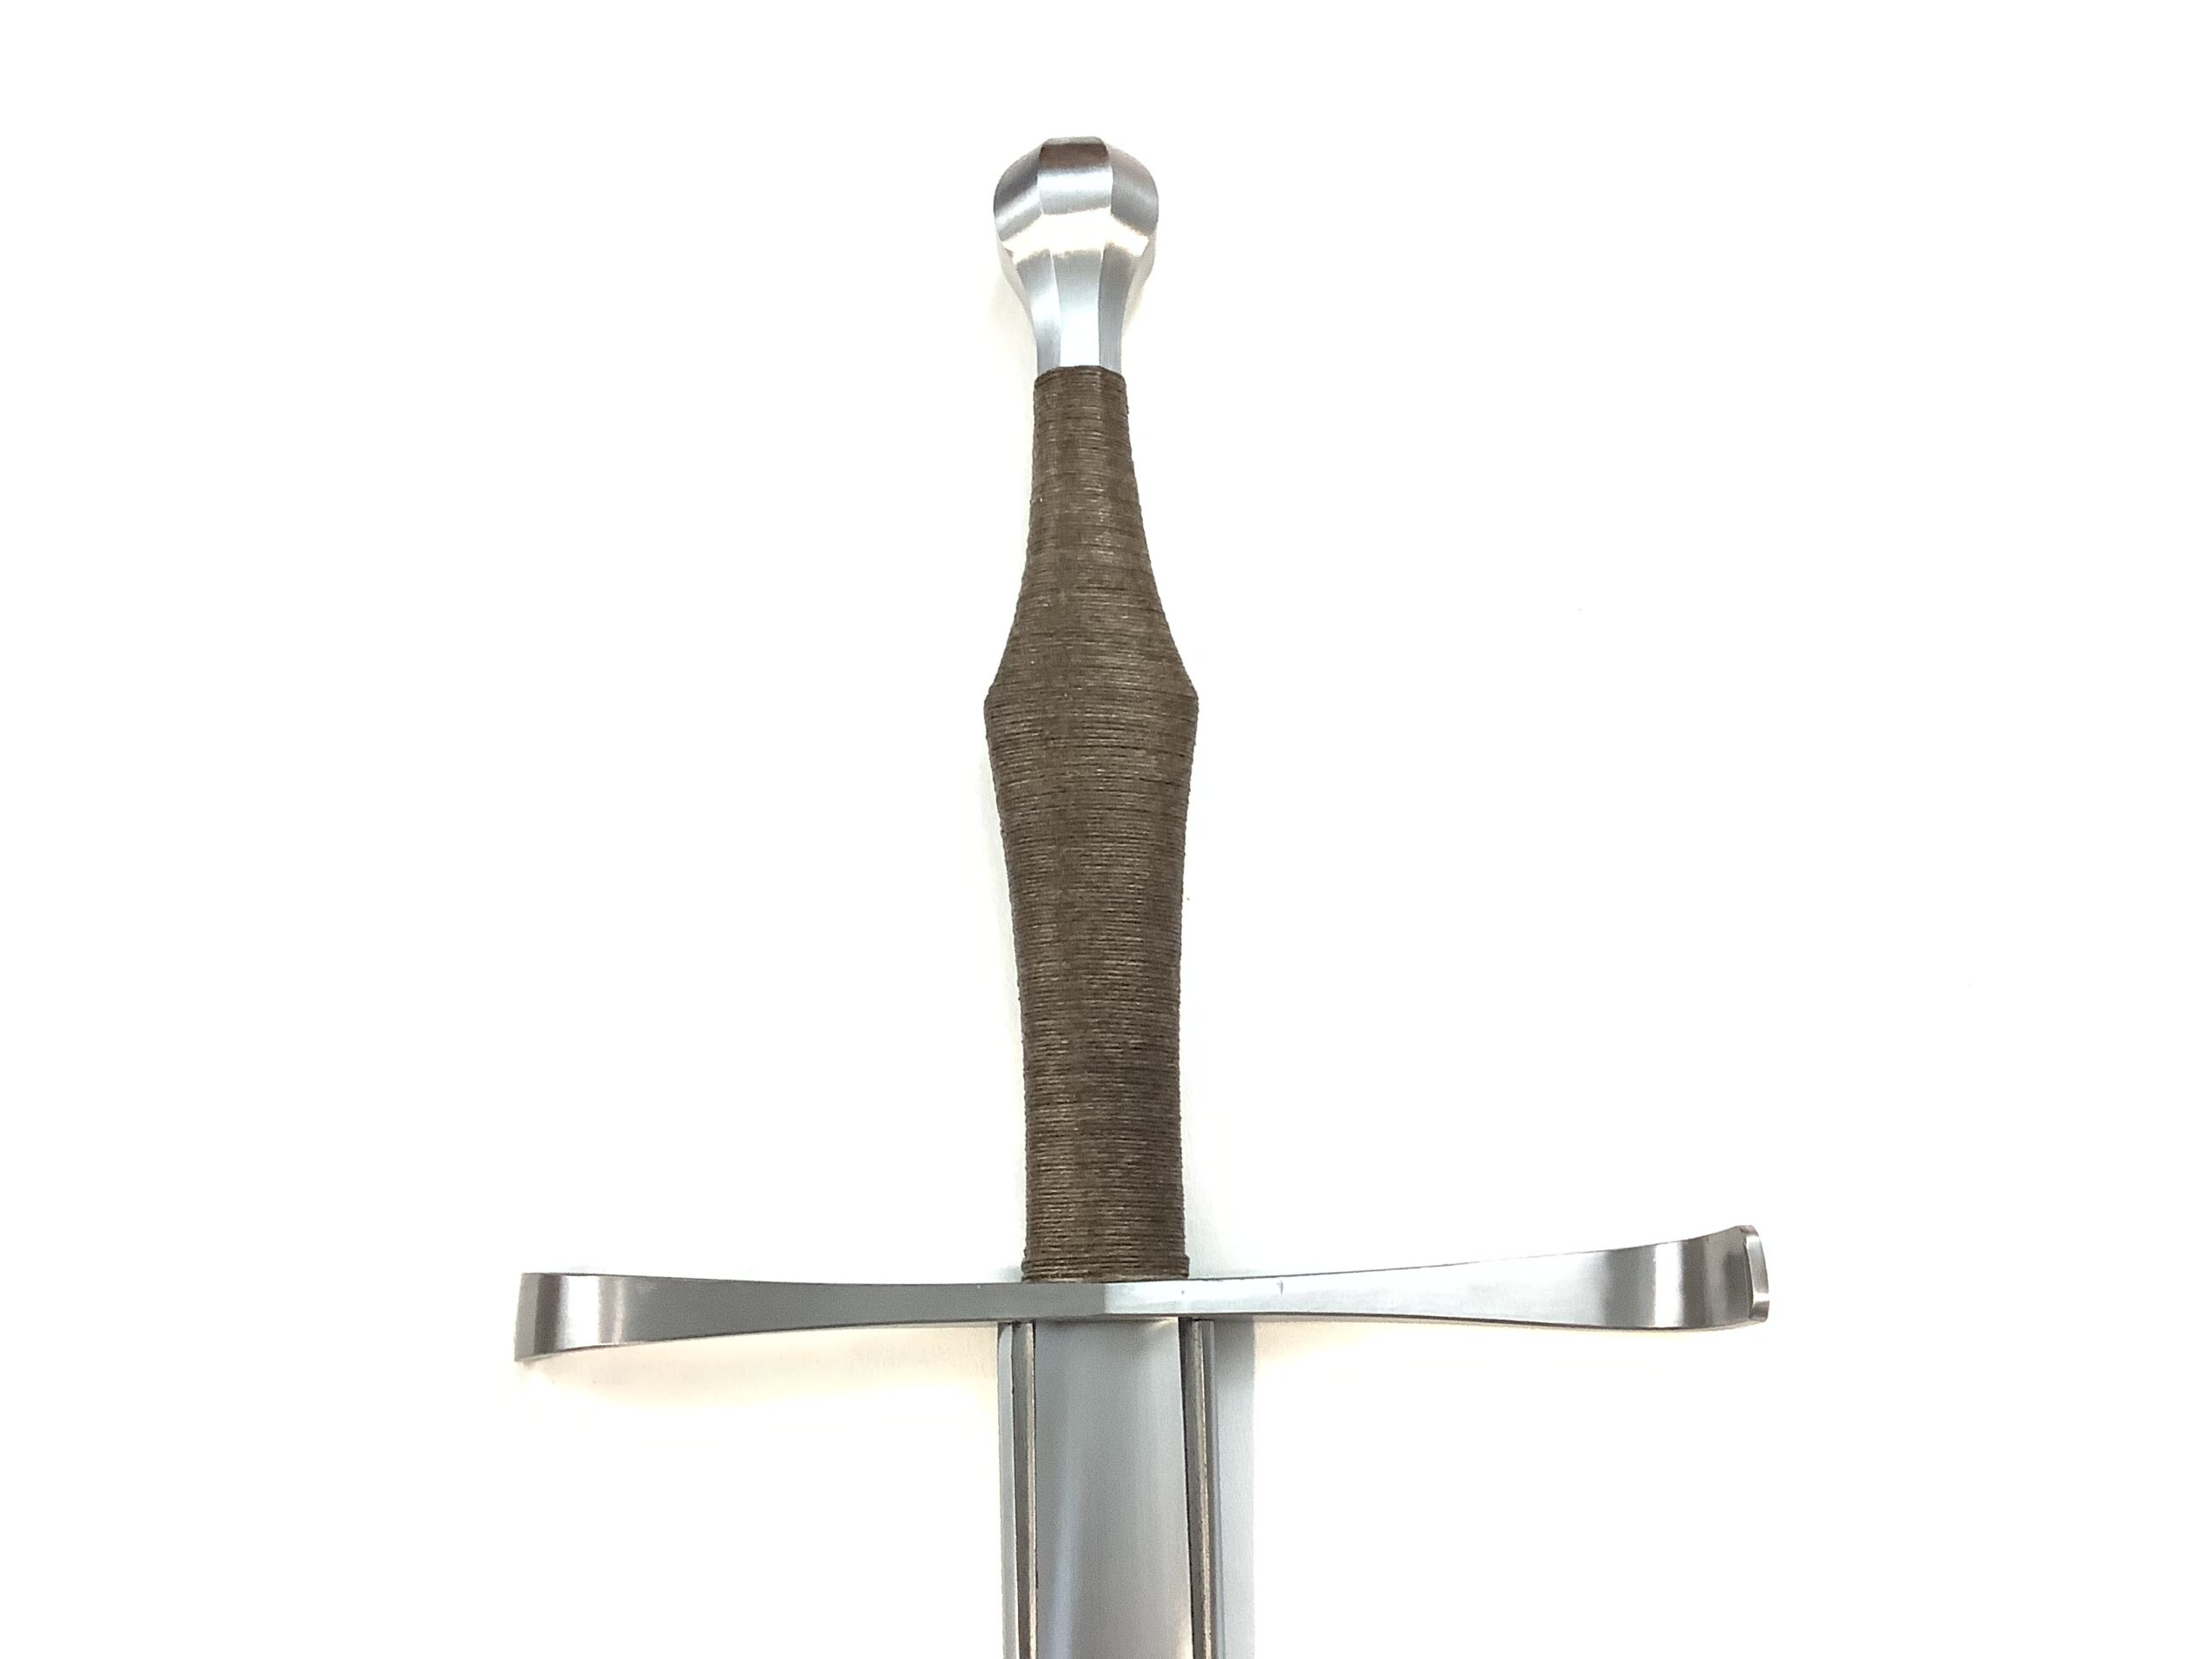 Chlebowski Fencing Sword III S Curve Cross (6)